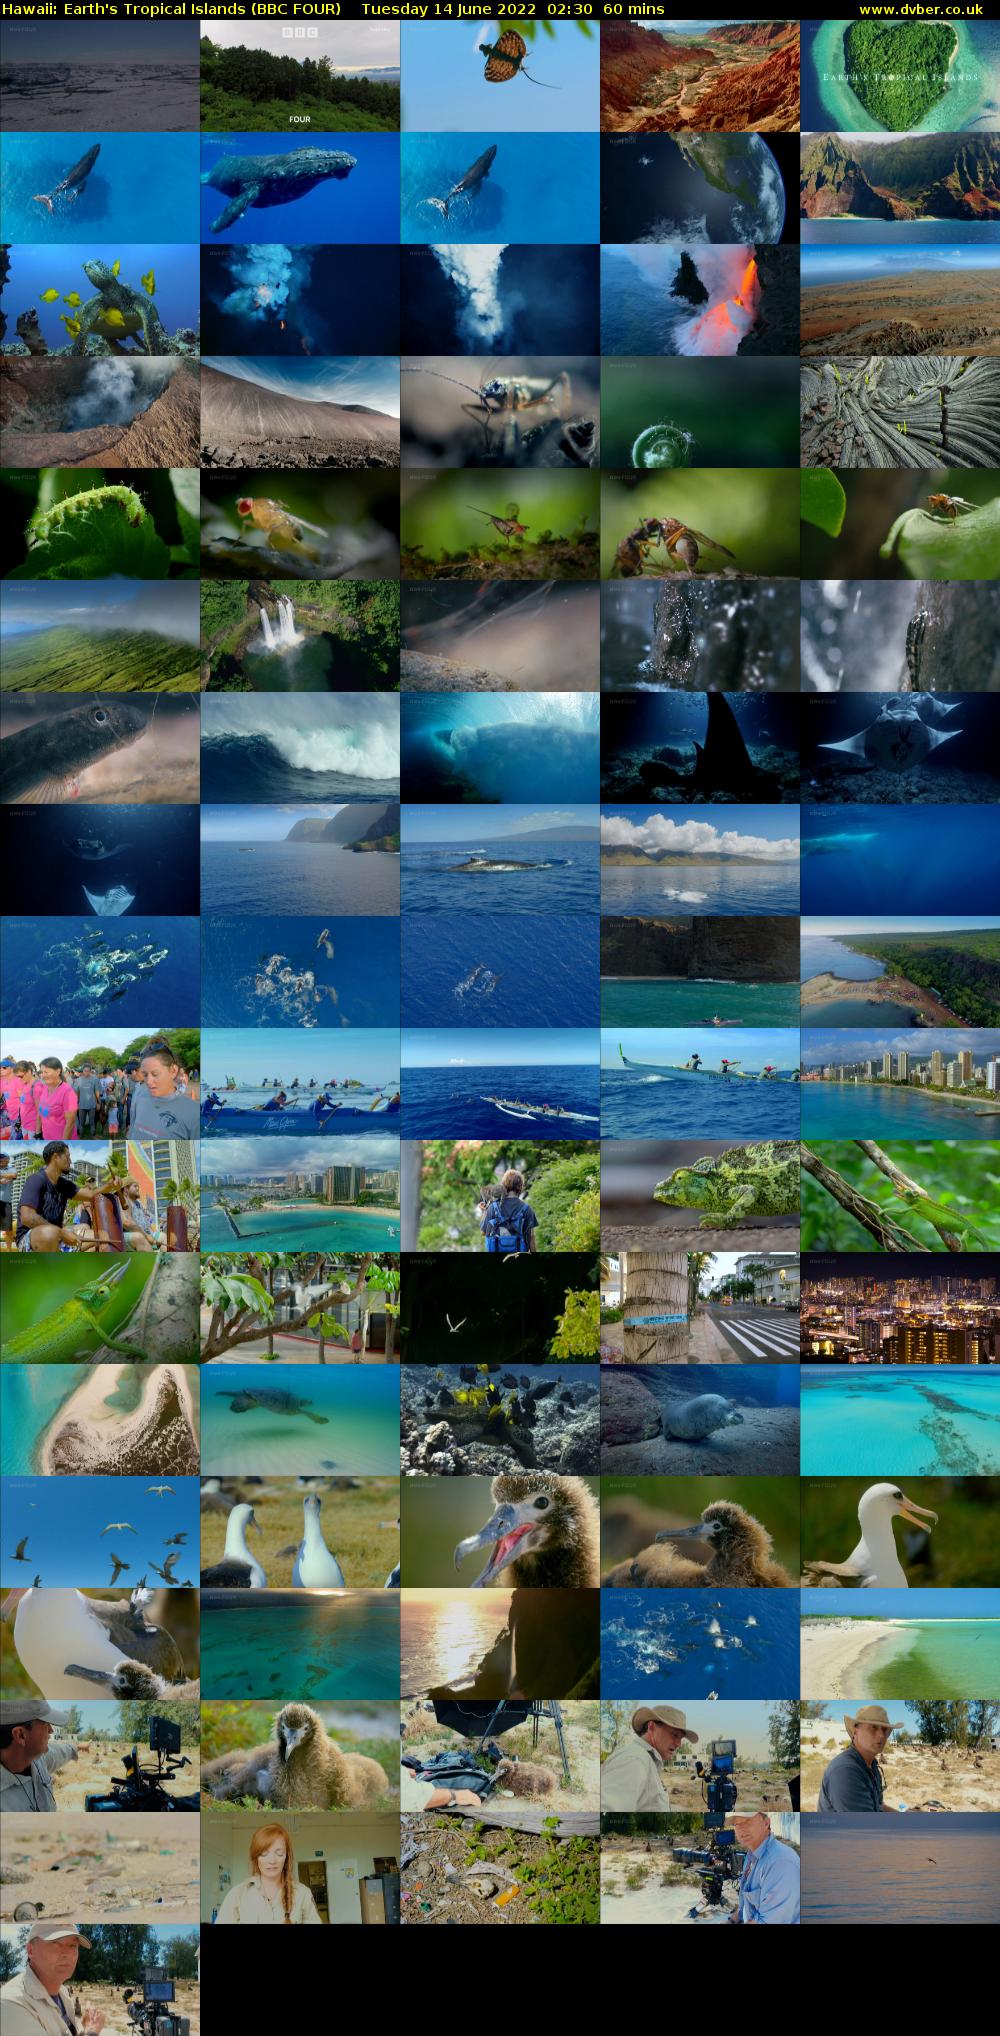 Hawaii: Earth's Tropical Islands (BBC FOUR) Tuesday 14 June 2022 02:30 - 03:30